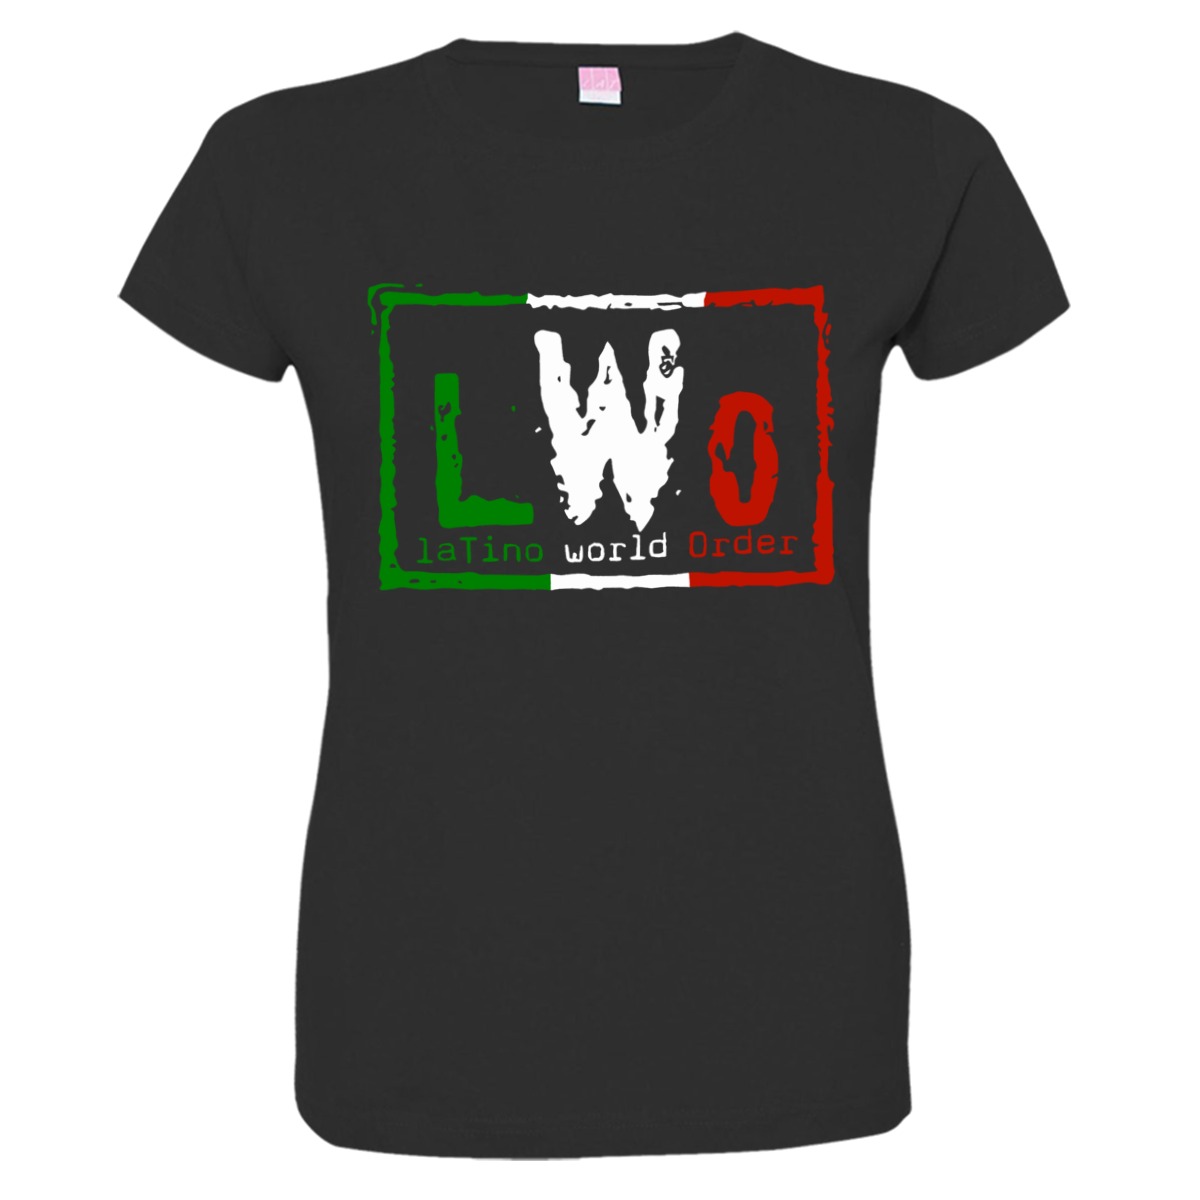 LICENSED Pro Wrestling Tees™ Womens Eddie Guerrero Latino World Order HQ Fashion Tee - image 1 of 2